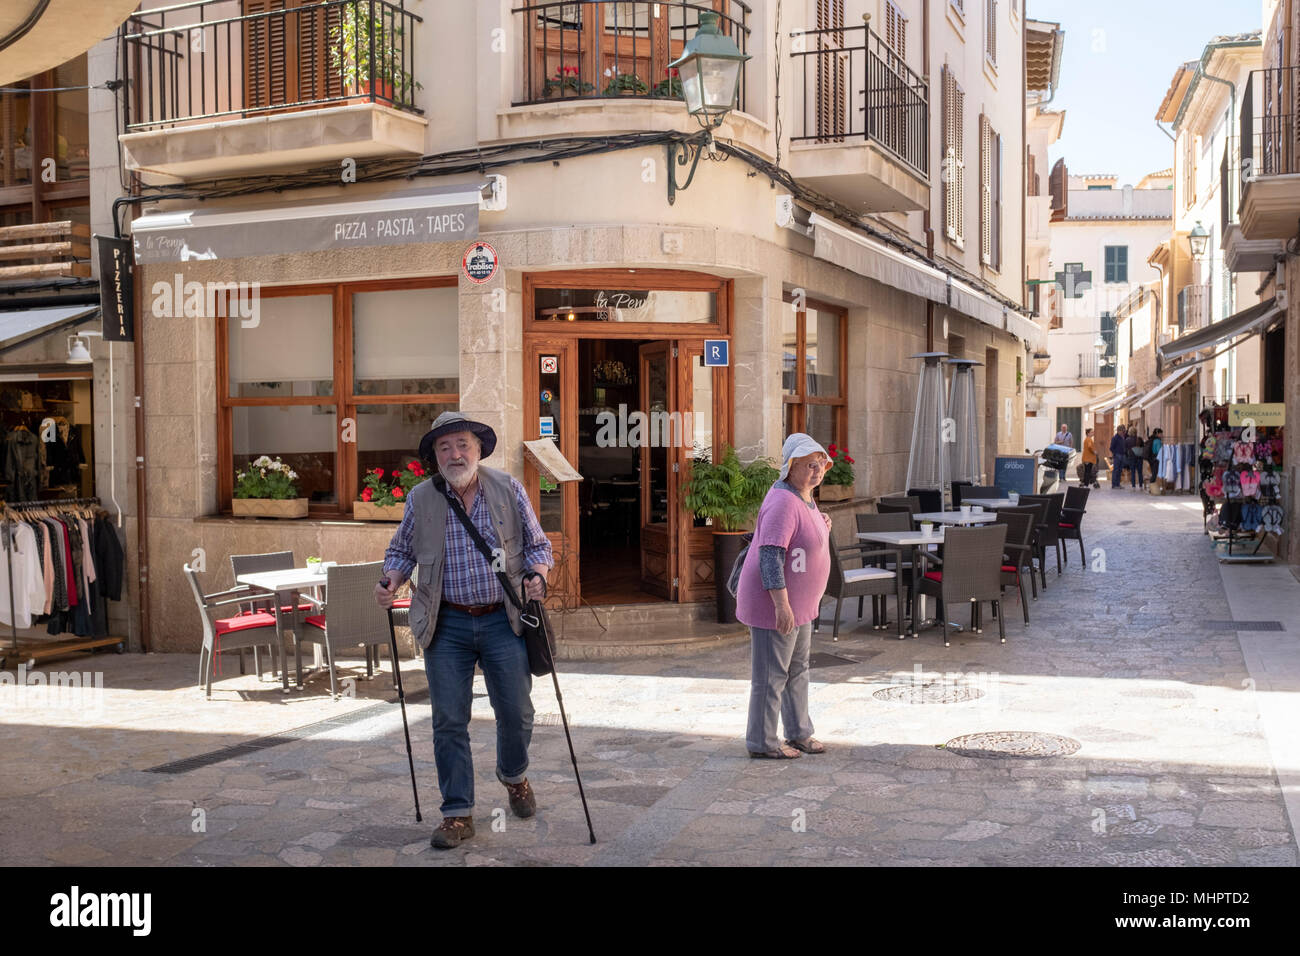 A street scene in Pollensa town, Mallorca, Spain. Stock Photo